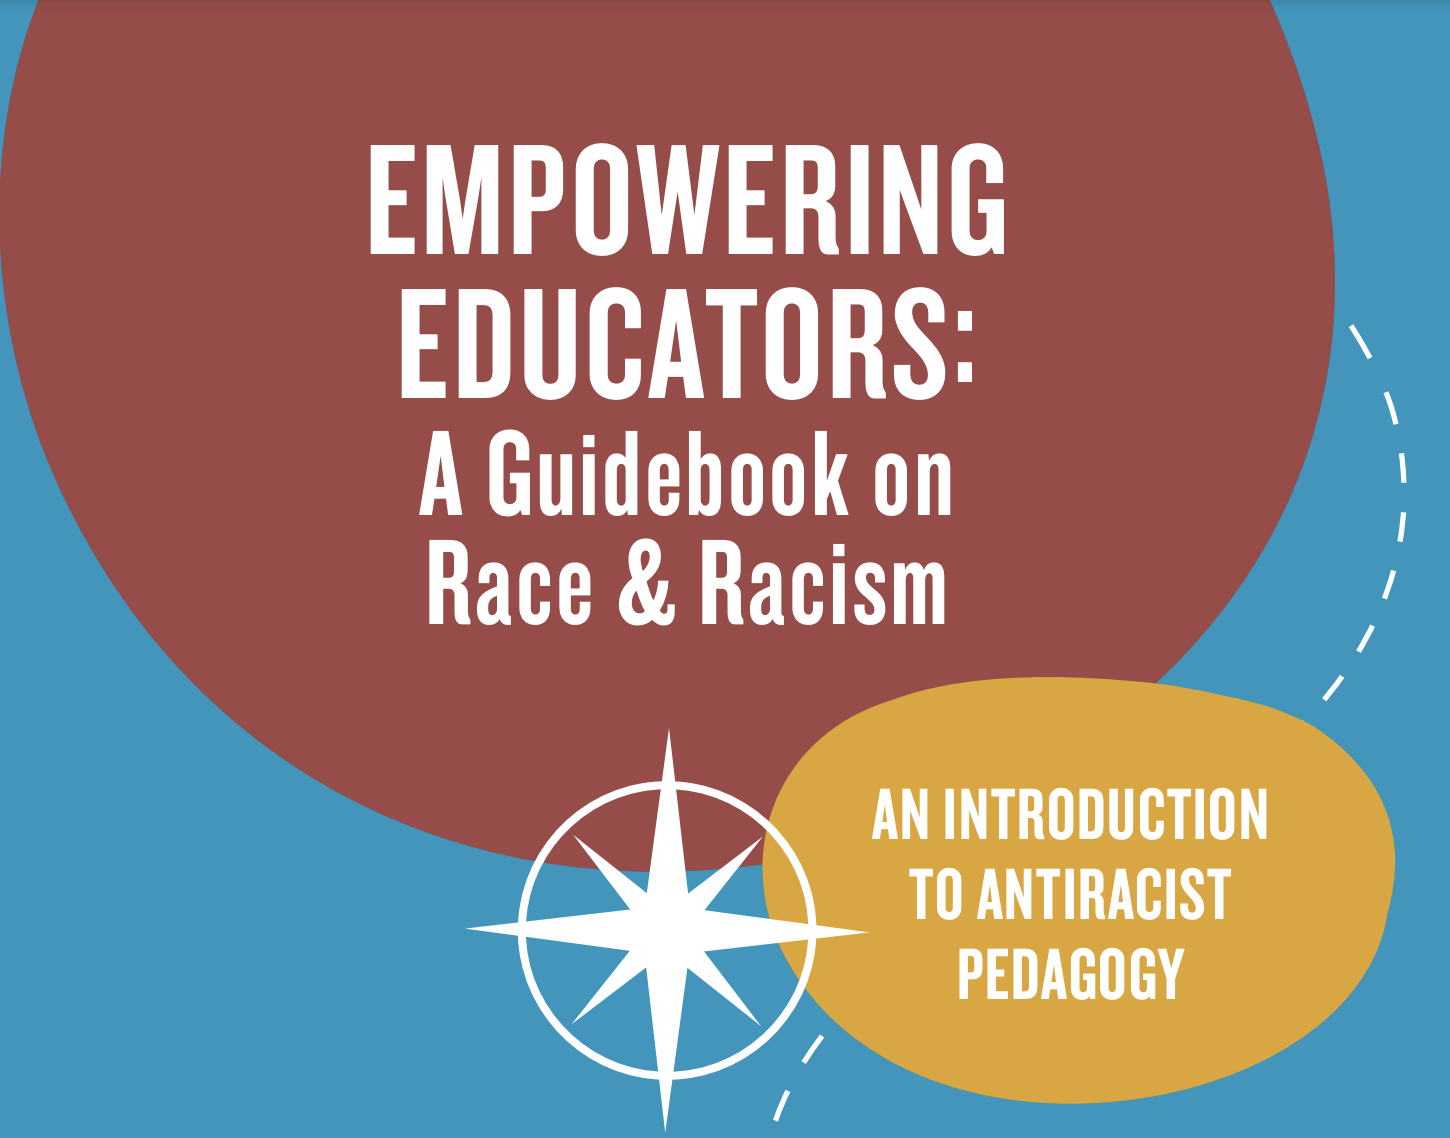 Guidebook on Race & Racism